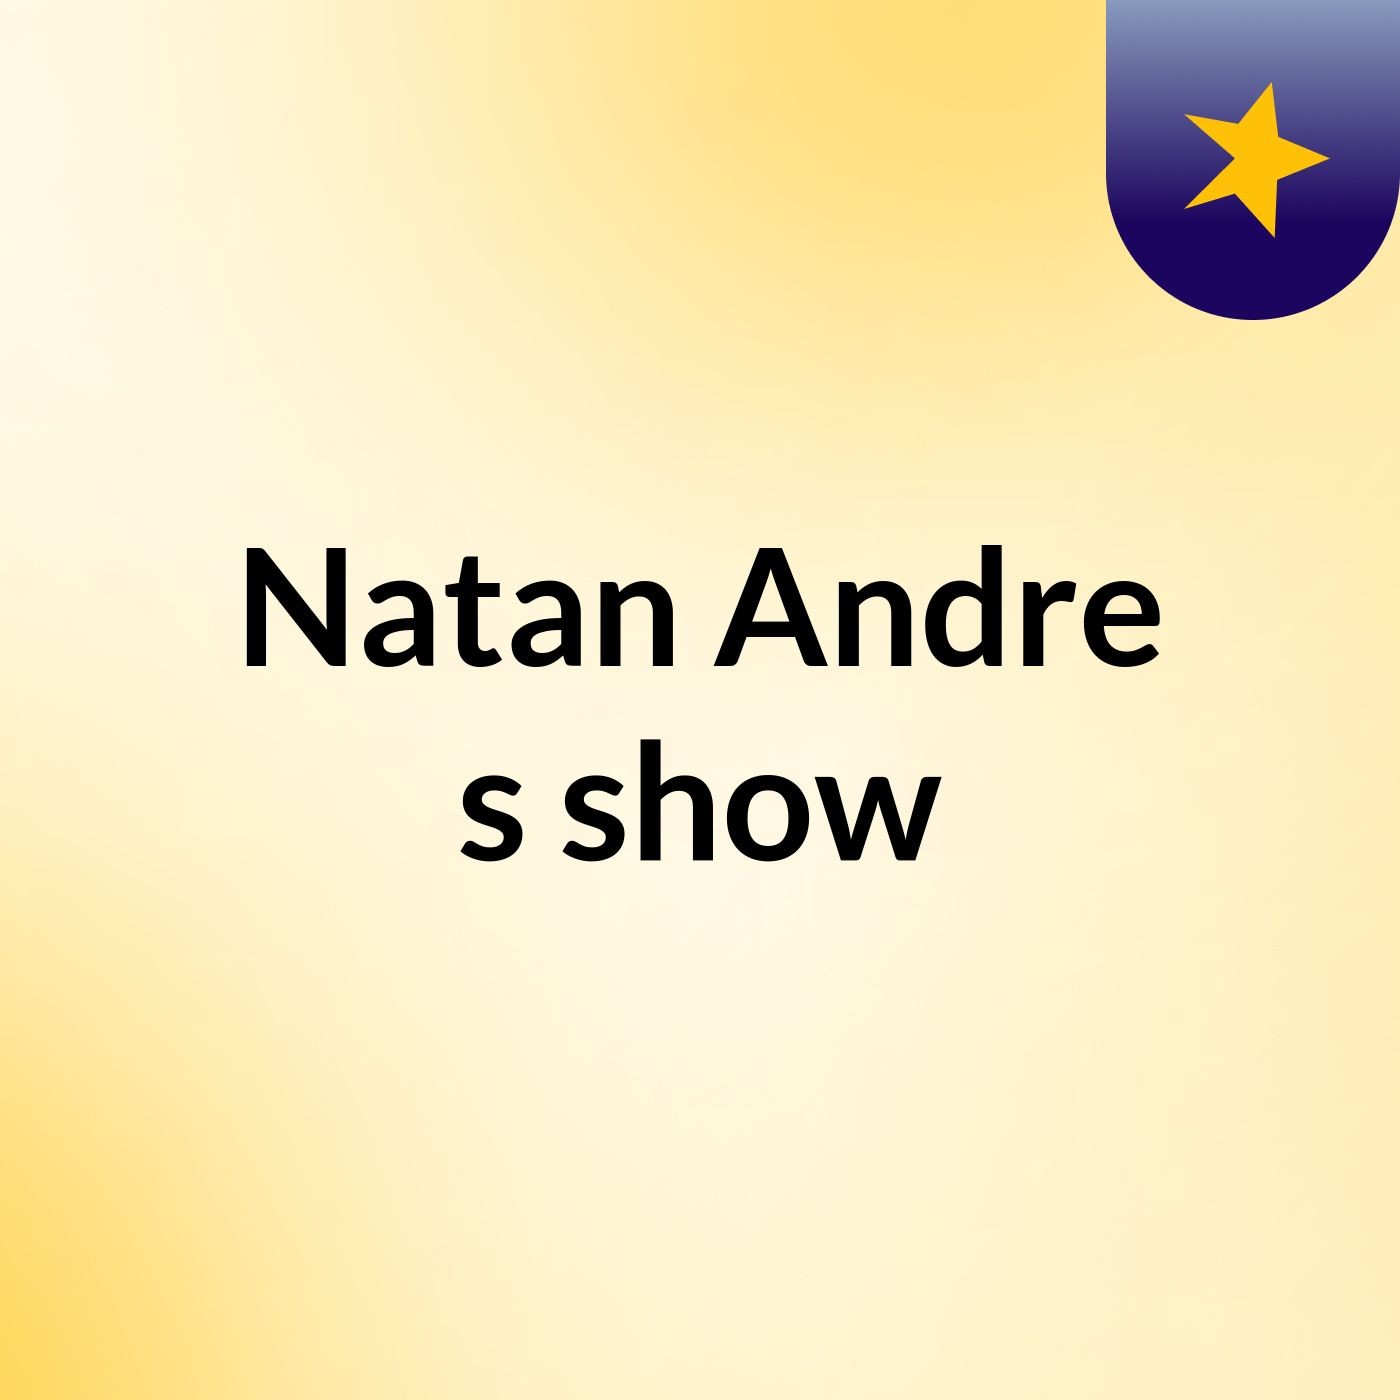 Natan Andre's show